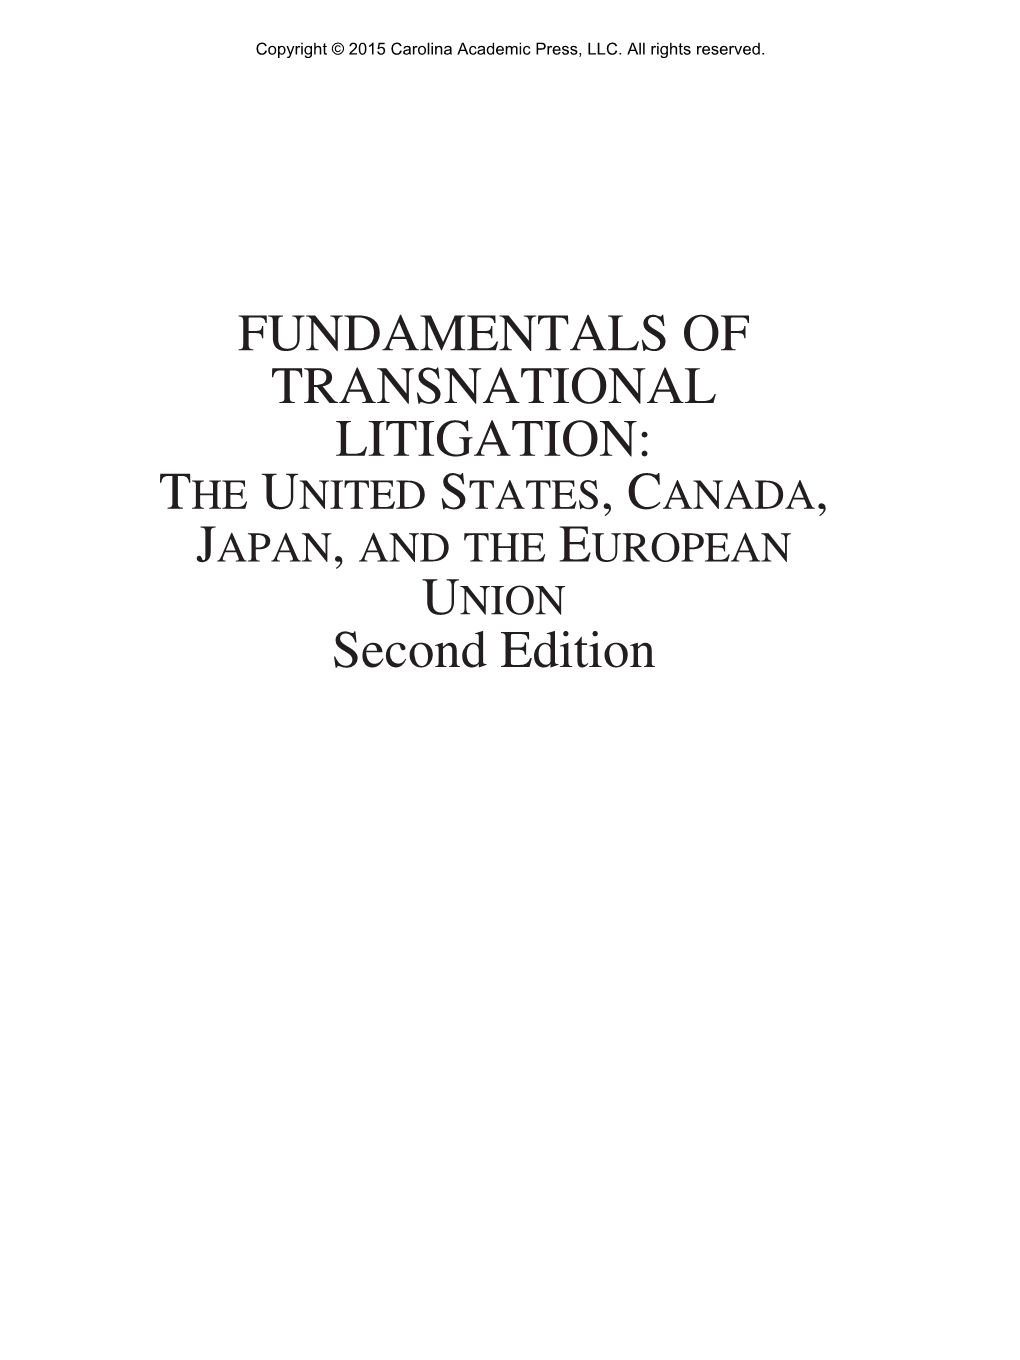 FUNDAMENTALS of TRANSNATIONAL LITIGATION: the UNITED STATES,CANADA, JAPAN, and the EUROPEAN UNION Second Edition Copyright © 2015 Carolina Academic Press, LLC